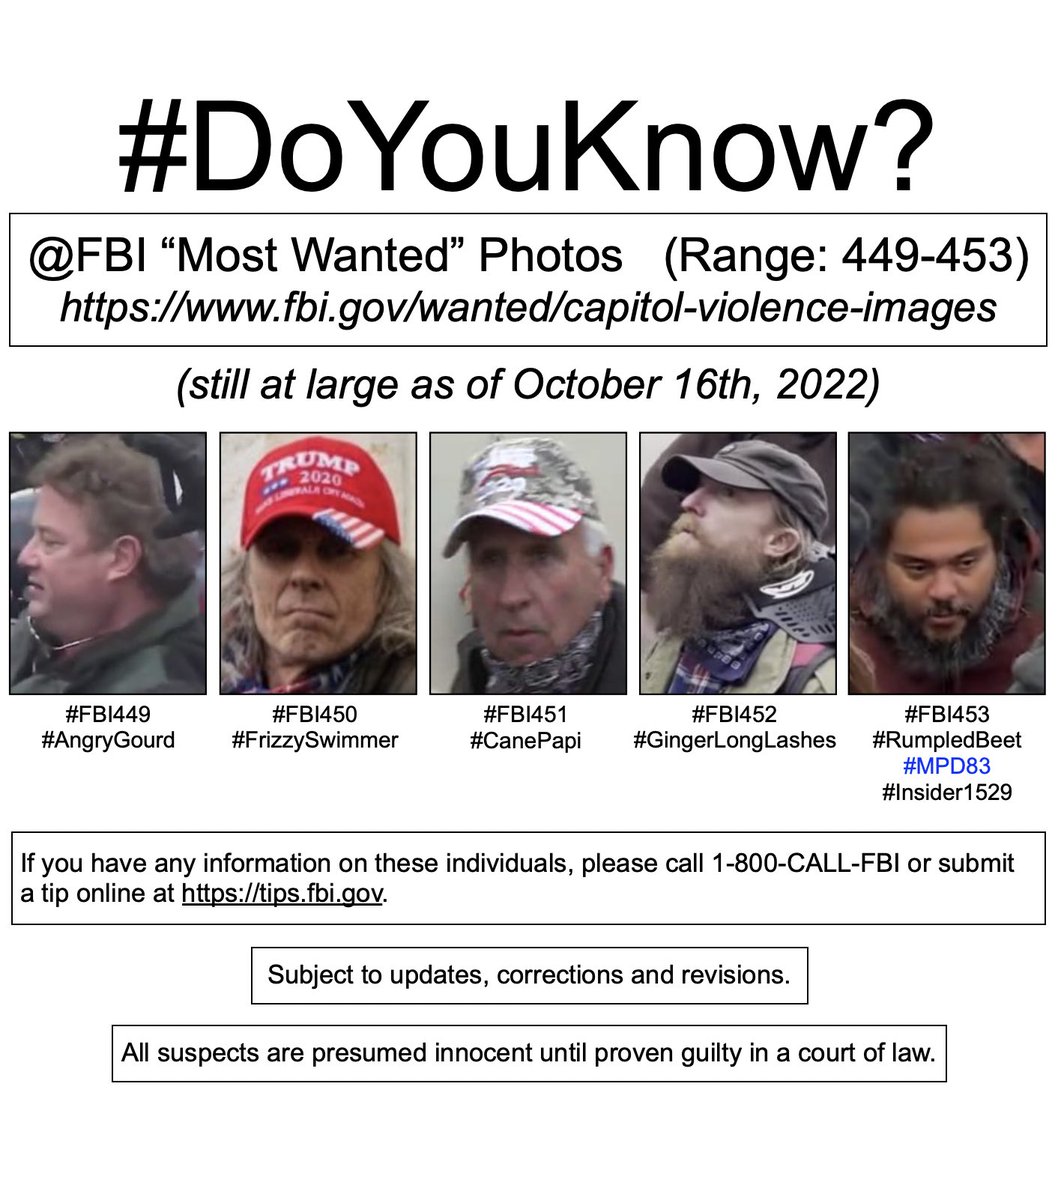 #SeditionHunters
#DoYouKnow?
🧵
52/

#FBI wanted list.
Link: fbi.gov/wanted/capitol…

Range: 449-453

#FBI449 (#AngryGourd)

#FBI450 (#FrizzySwimmer)

#FBI451 (#CanePapi)

#FBI452 (#GingerLongLashes)

#FBI453 (#RumpledBeet)(#MPD83)(#Insider1529)

#SeditionInsiders